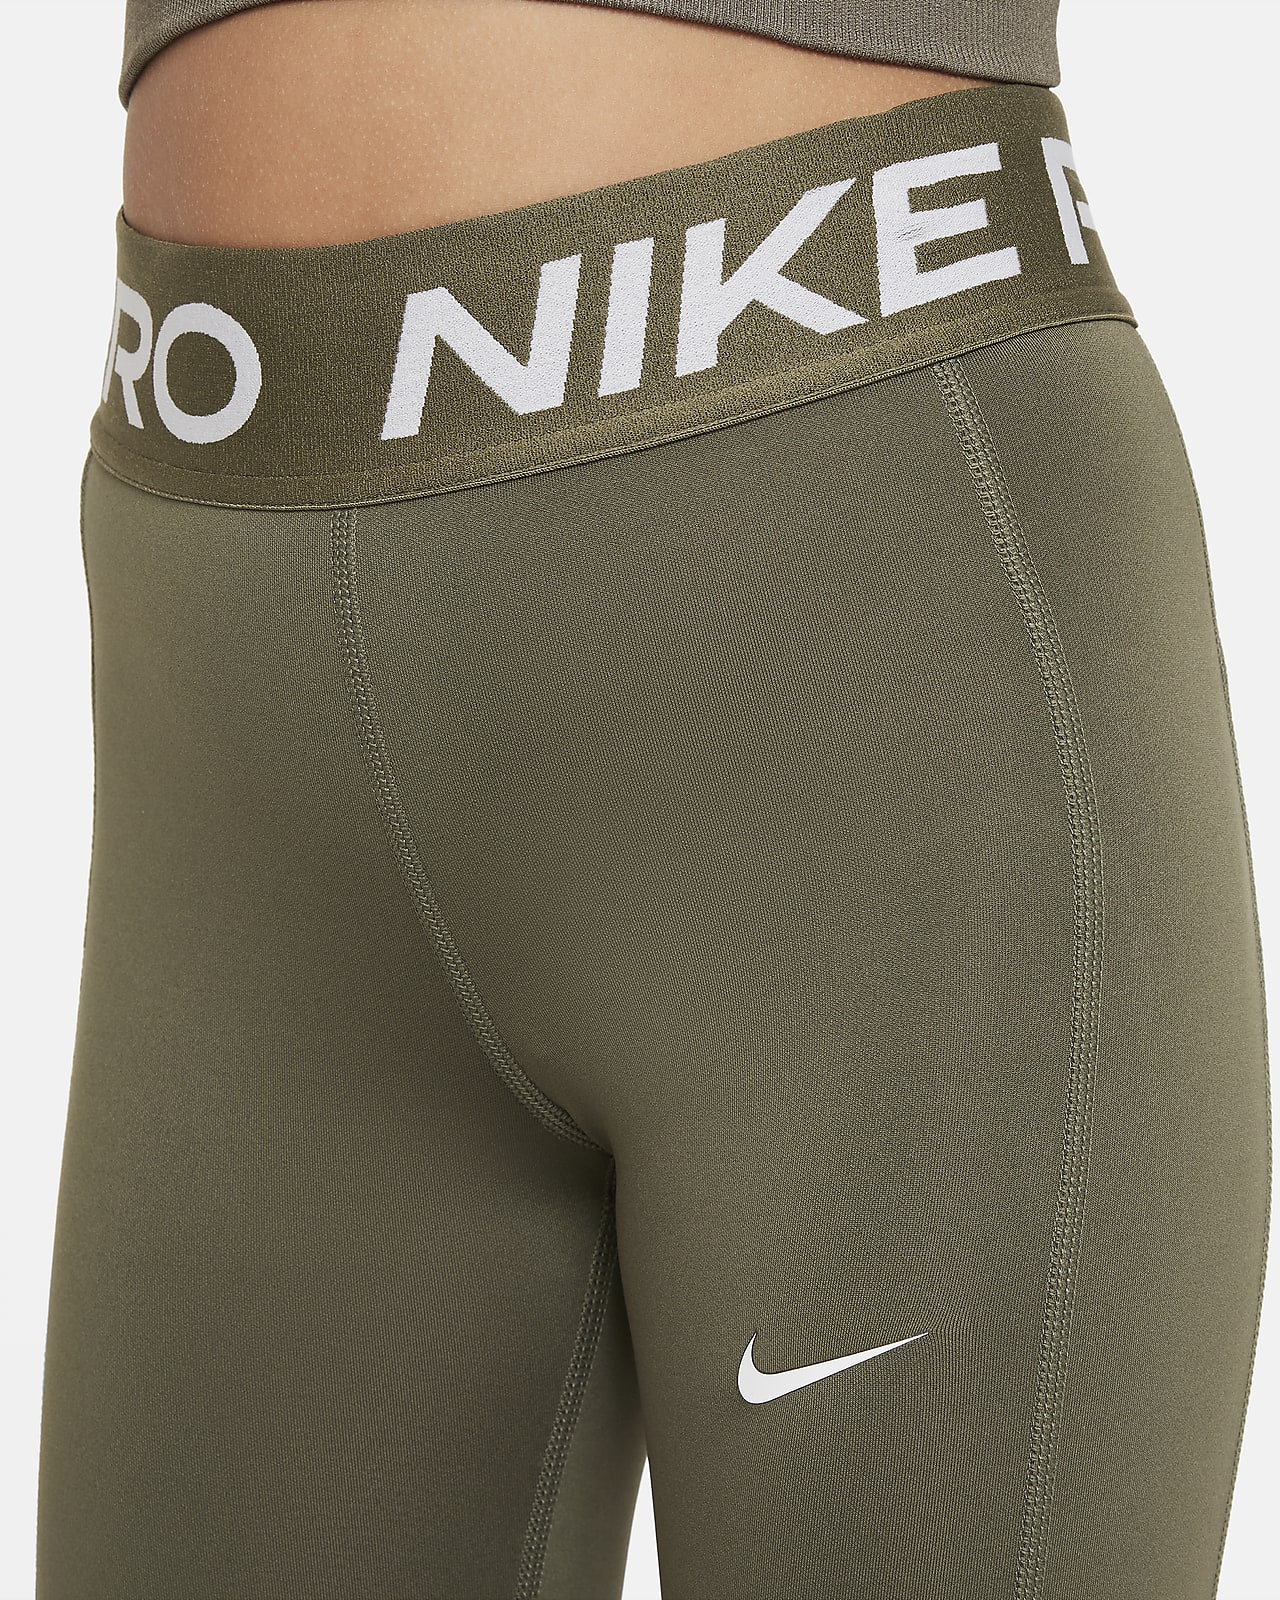 Nike Performance Leggings - medium olive/black/(white)/olive